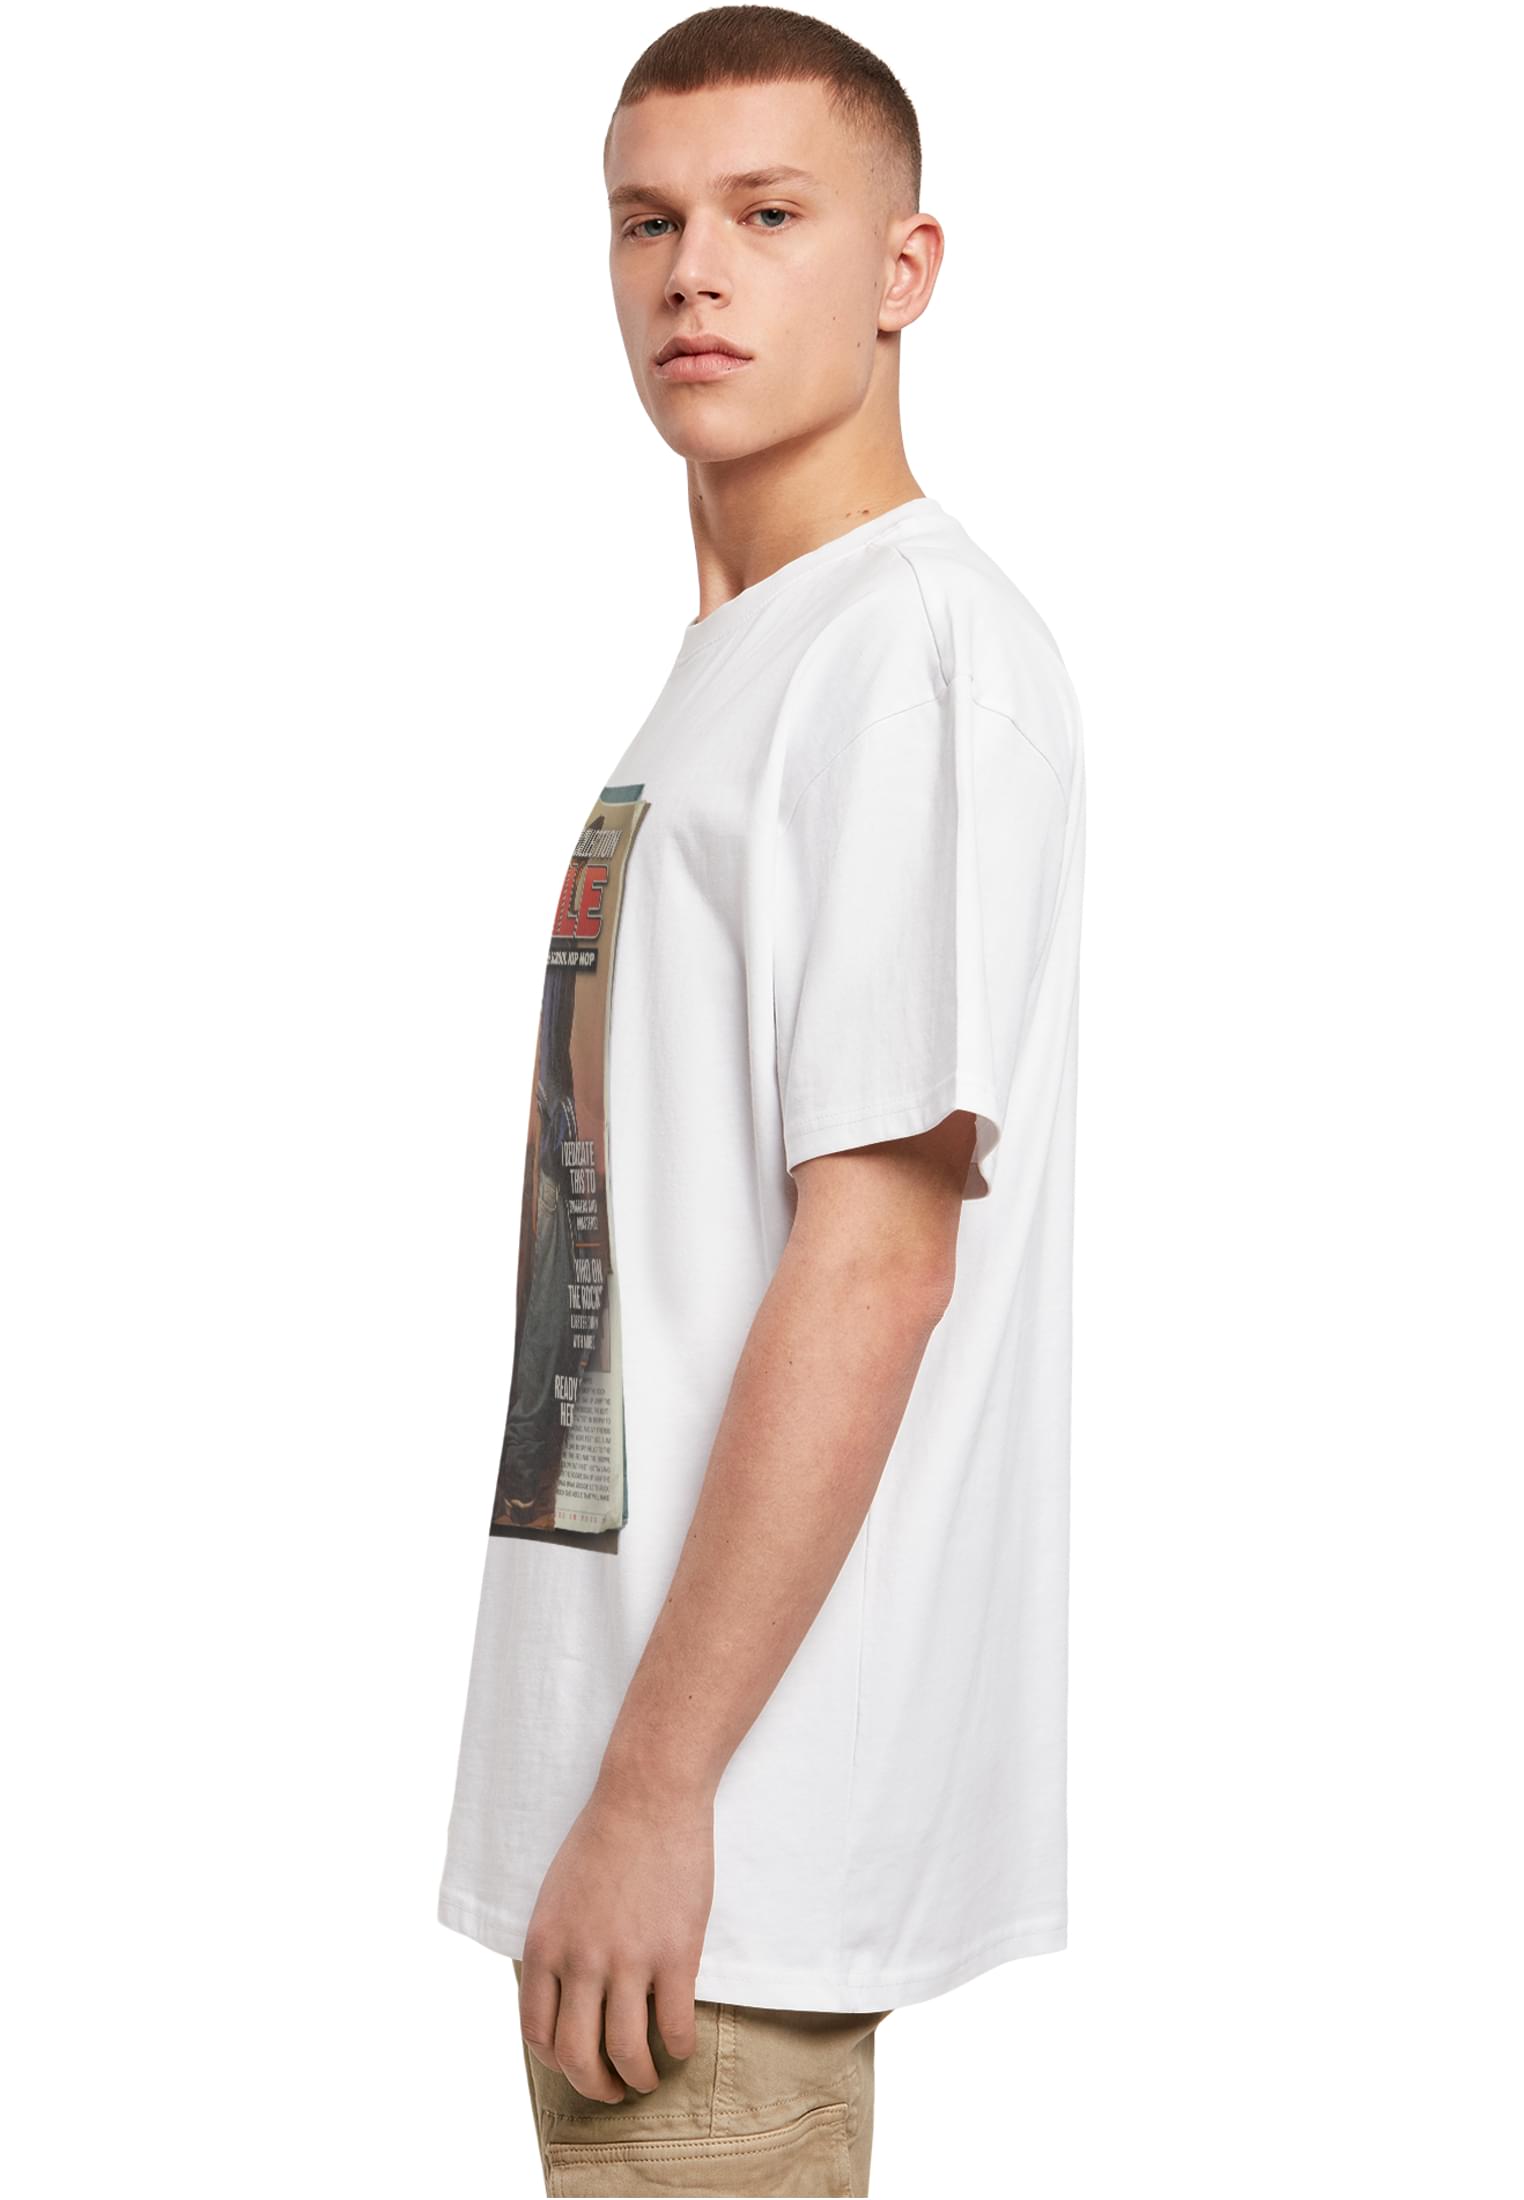 Upscale Studios Magazine Oversize T-Shirt white im BAWRZ® One Stop Hip-Hop Shop